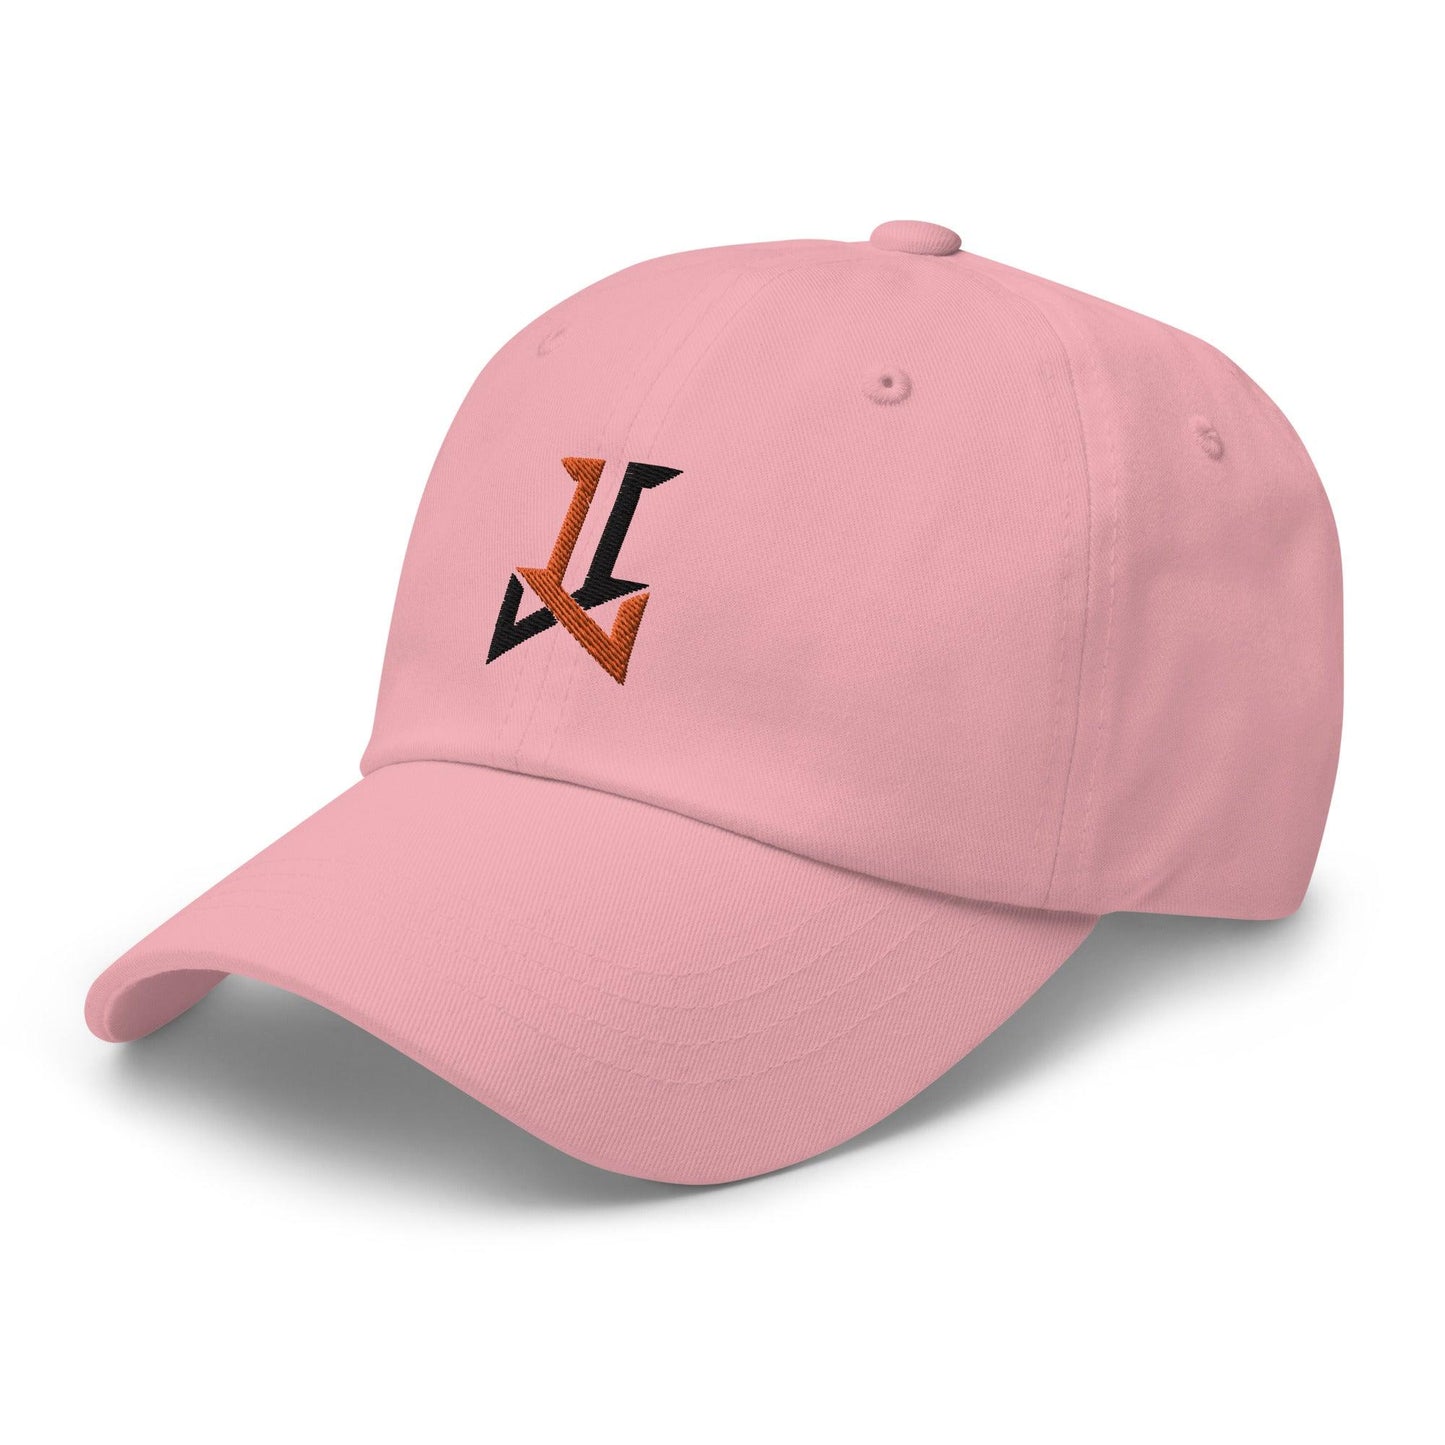 Logan Jordan "Essential" hat - Fan Arch